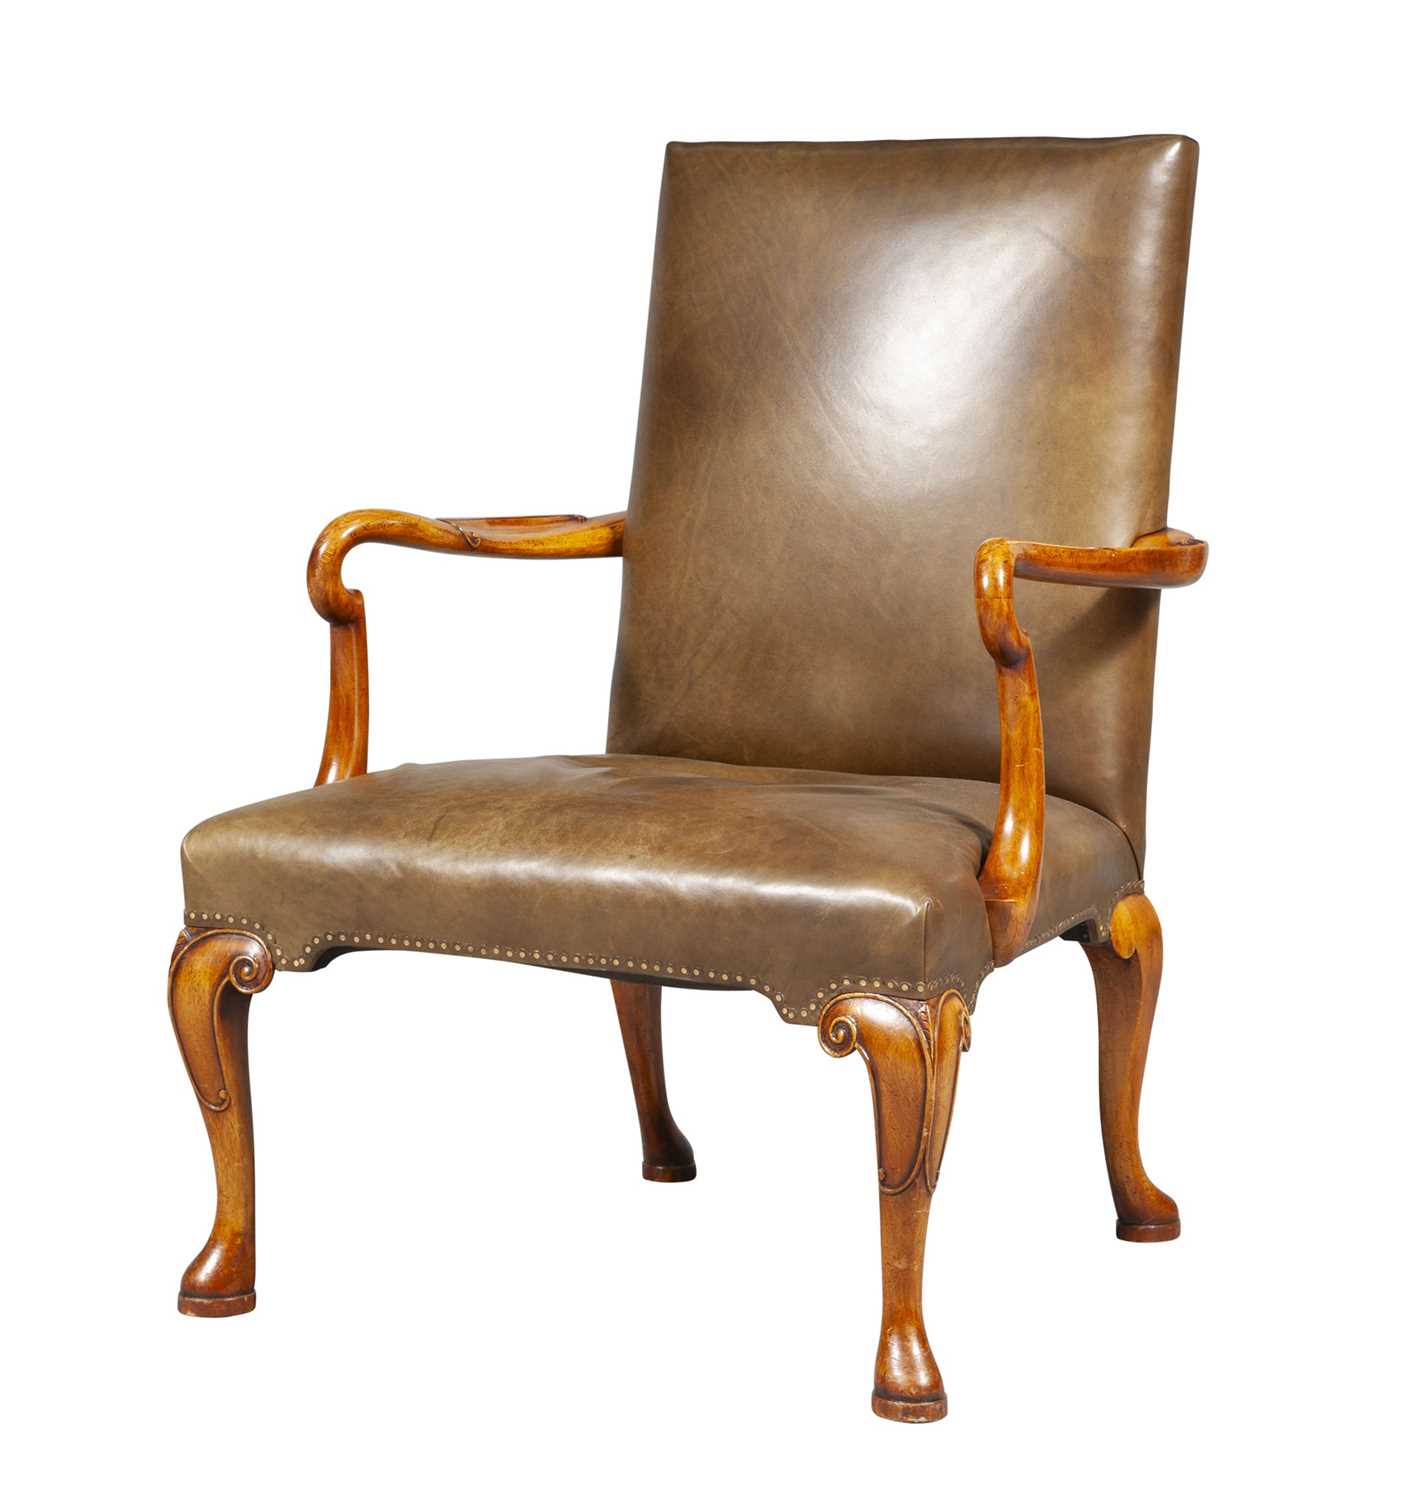 Lot 84 - George II Style Upholstered Walnut Shepherd's Crook Armchair